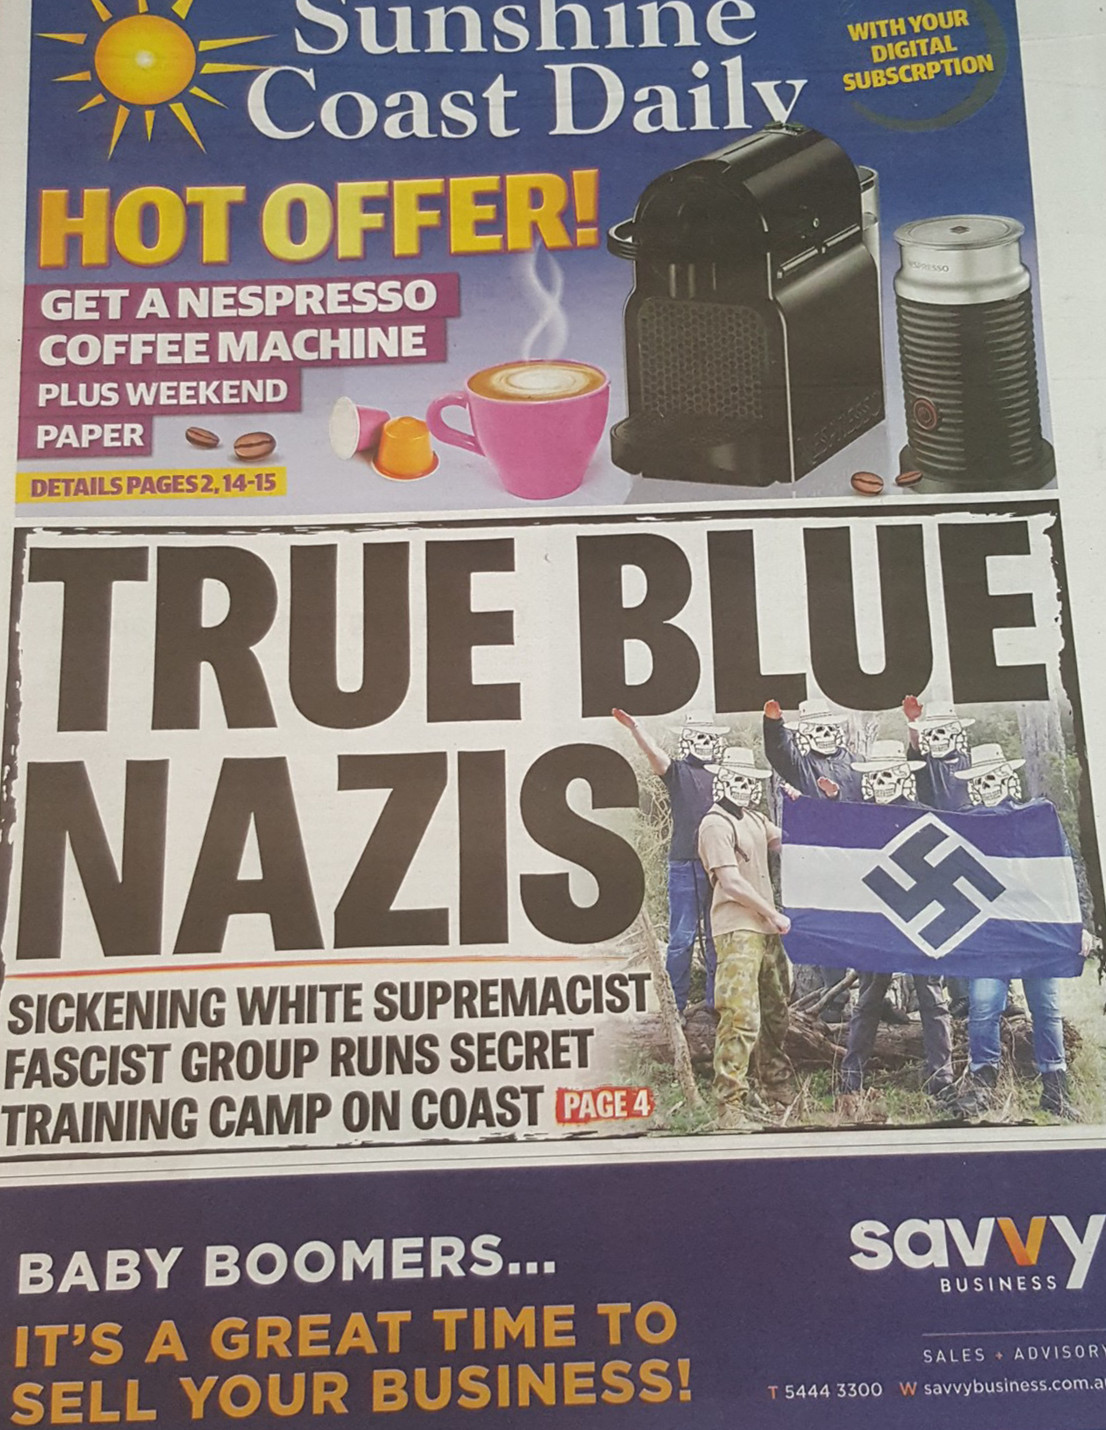 True Blue Nazis